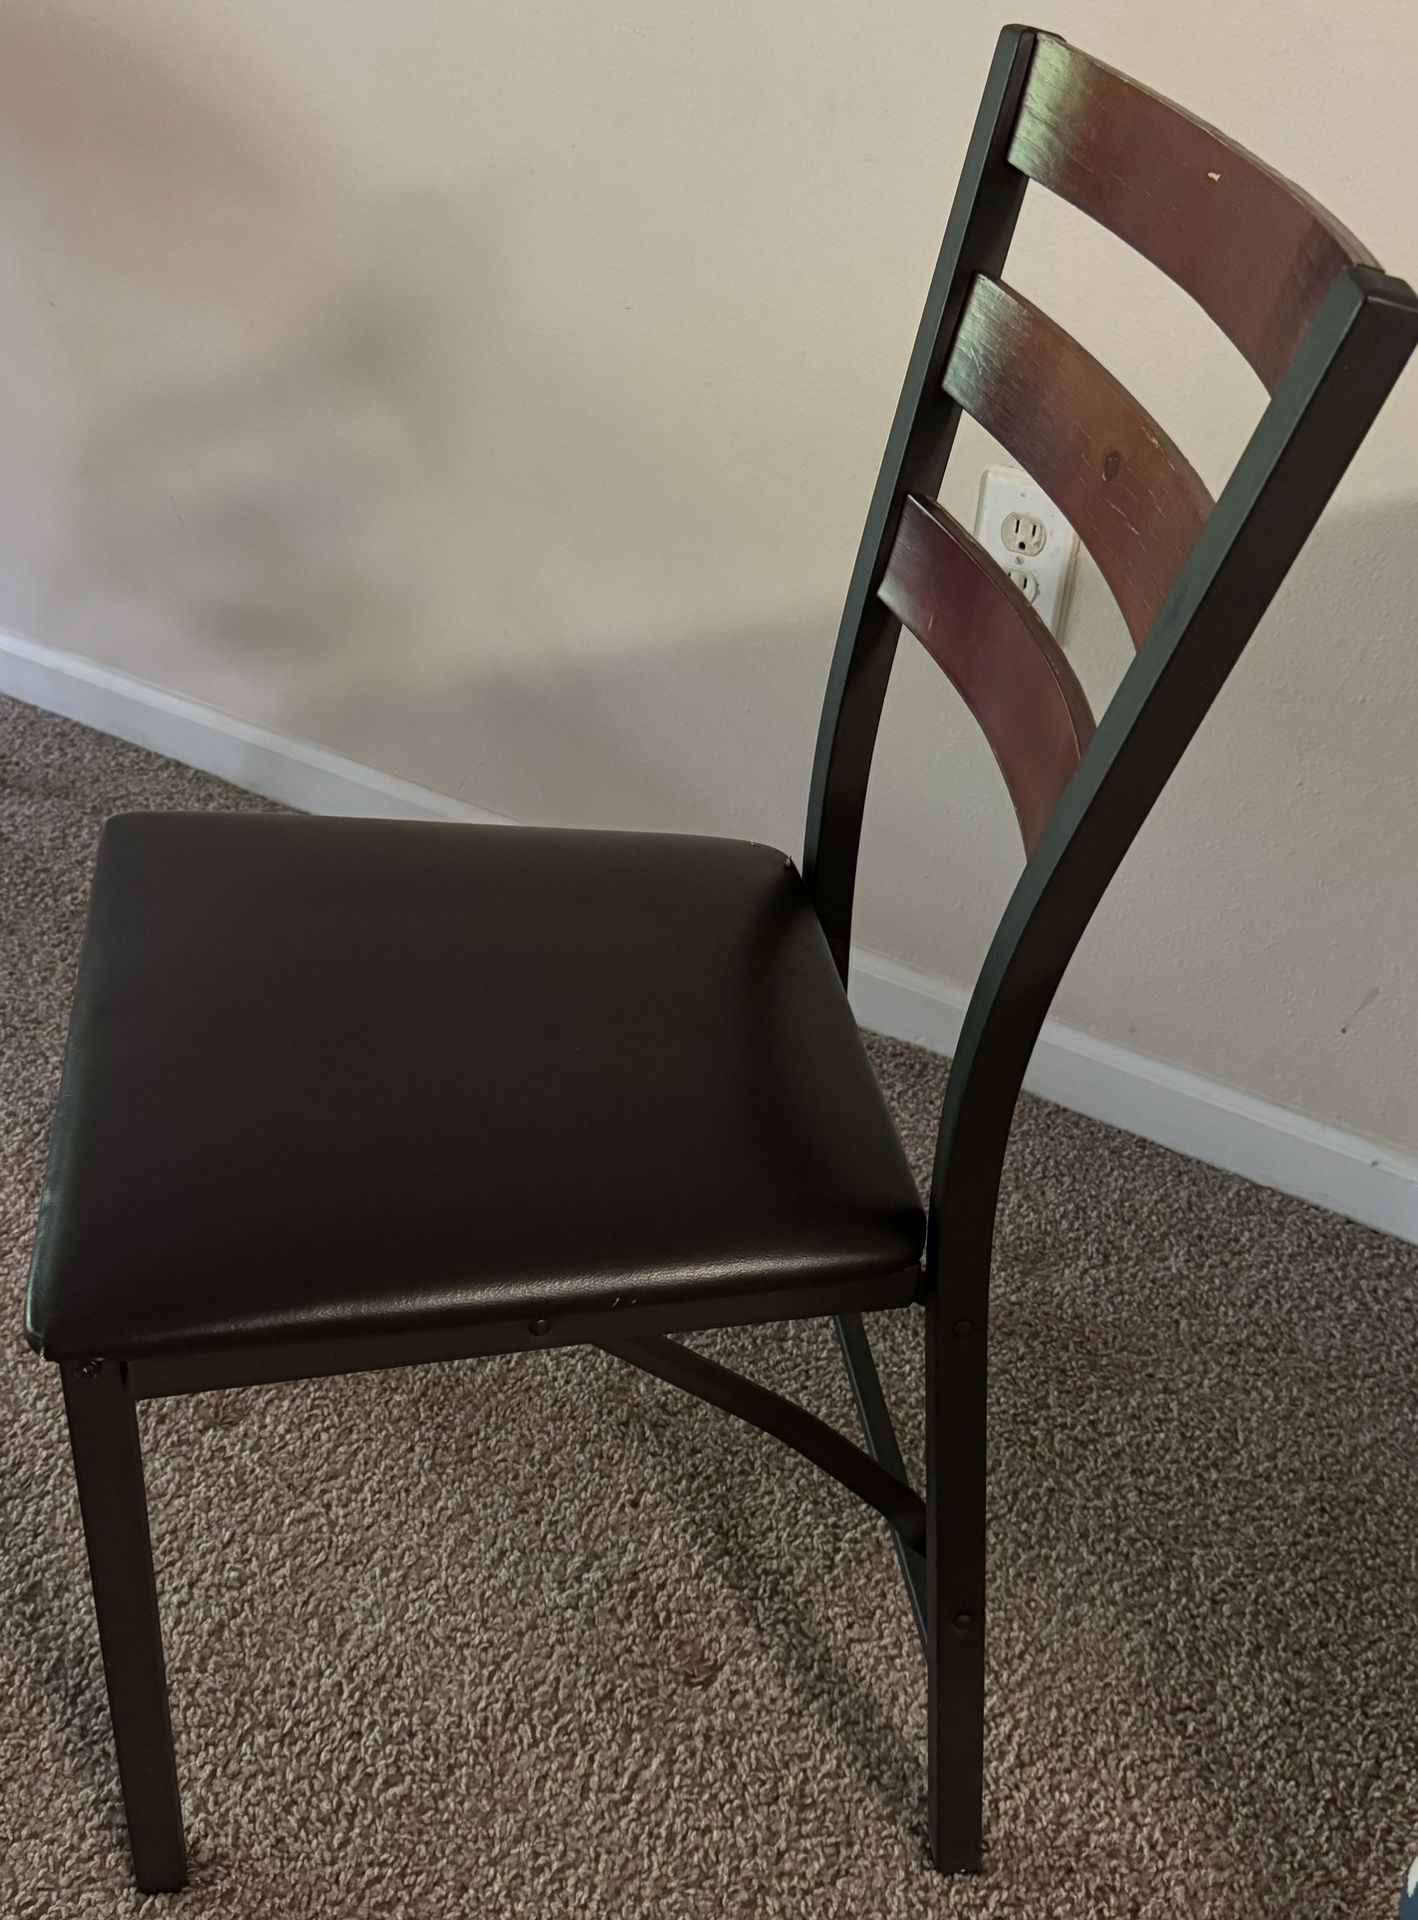 Metal Chair